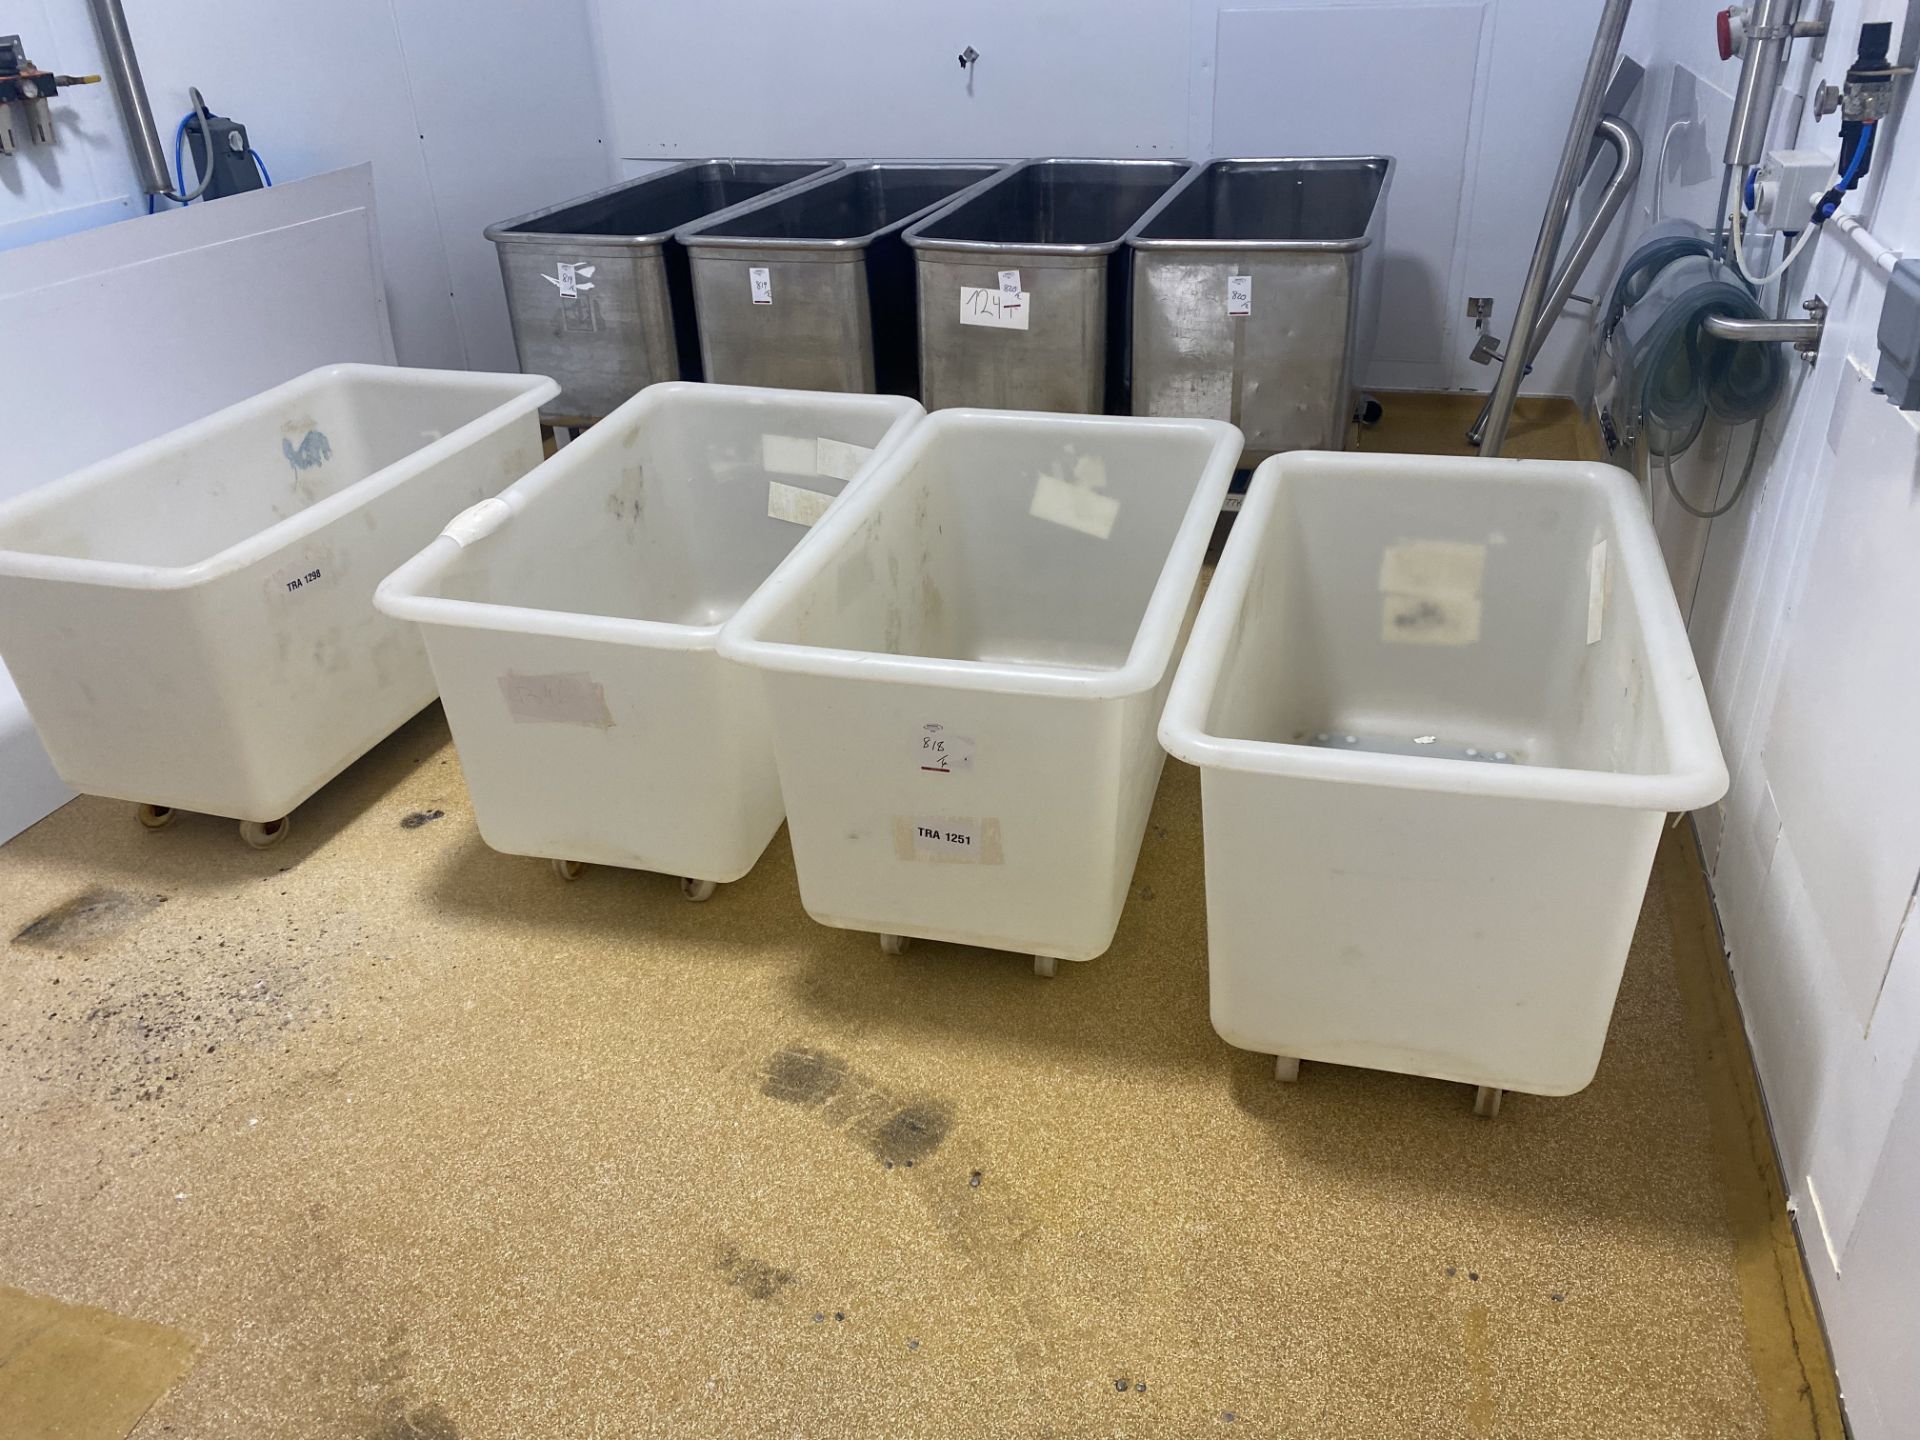 4 mobile plastic tubs